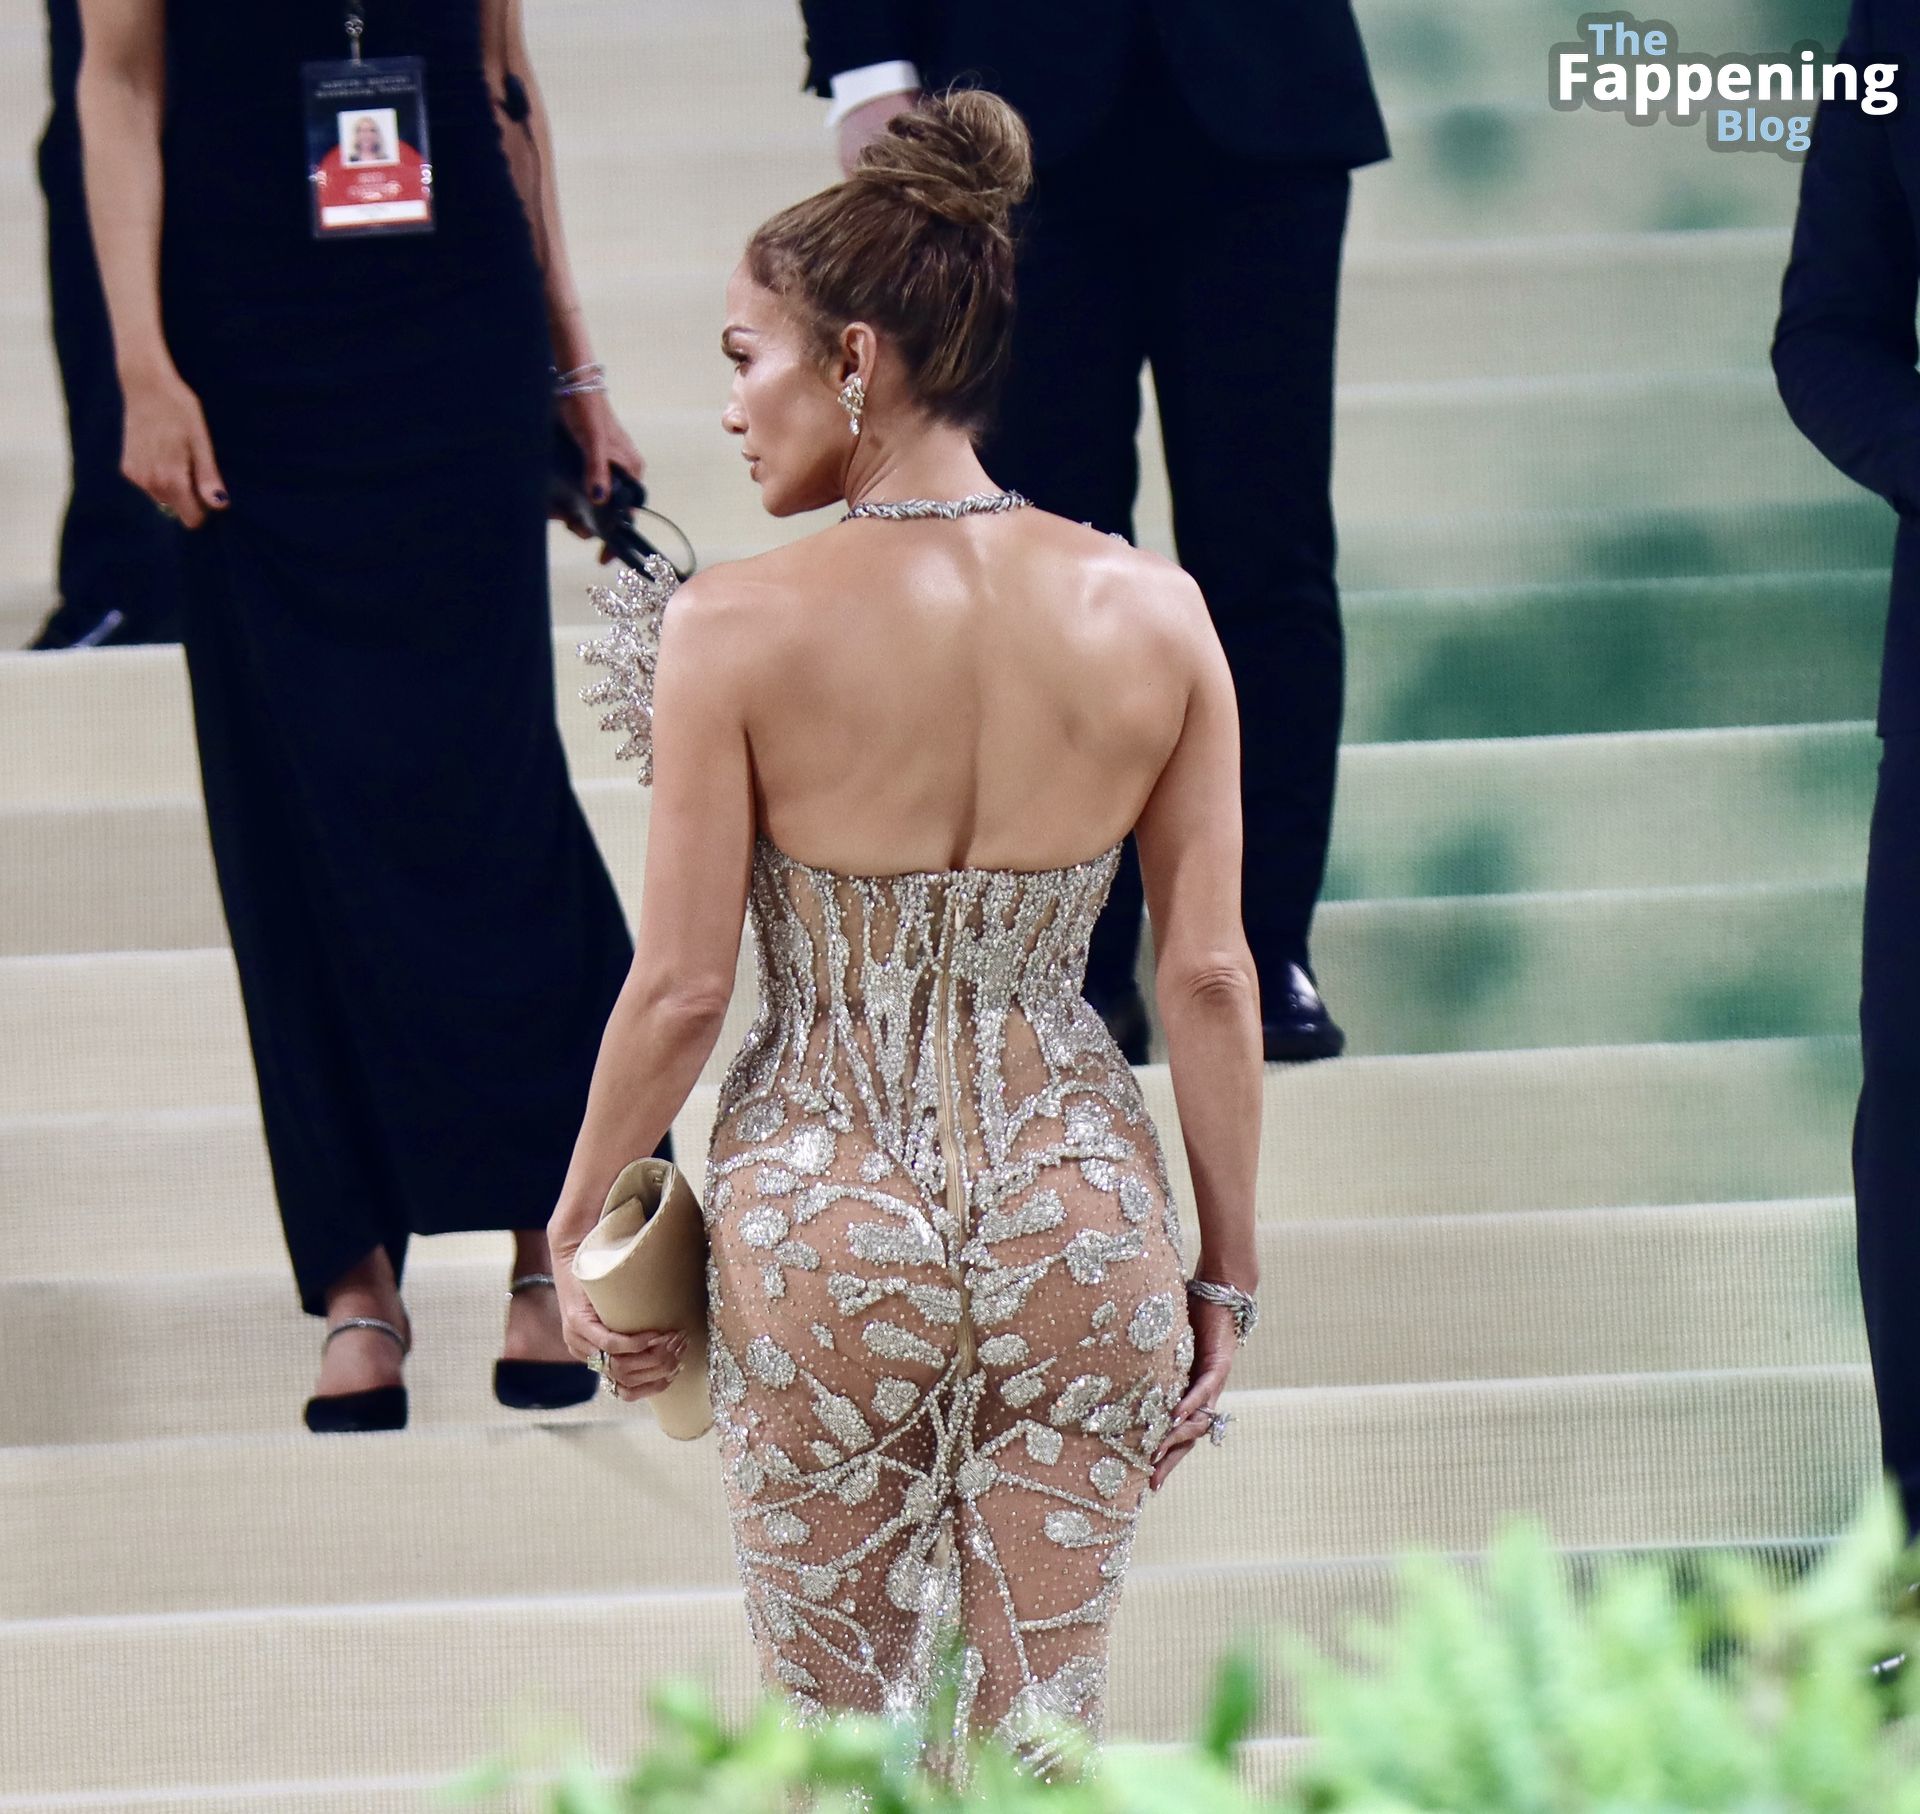 Jennifer-Lopez-Hot-131-The-Fappening-Blog.jpg